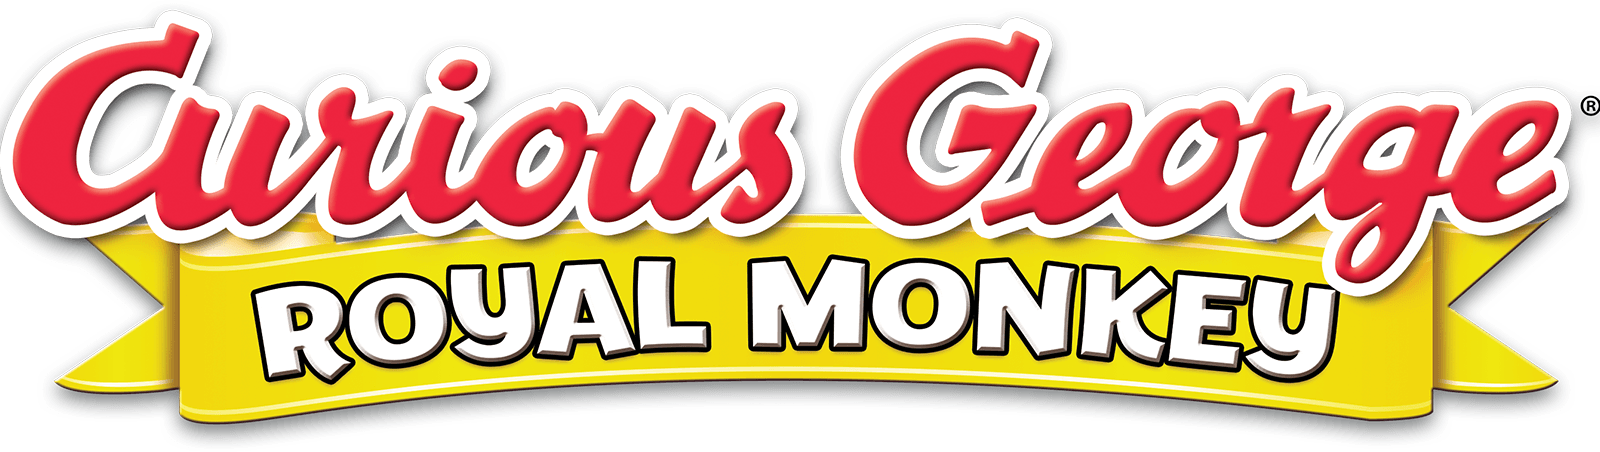 Curious George: Royal Monkey logo